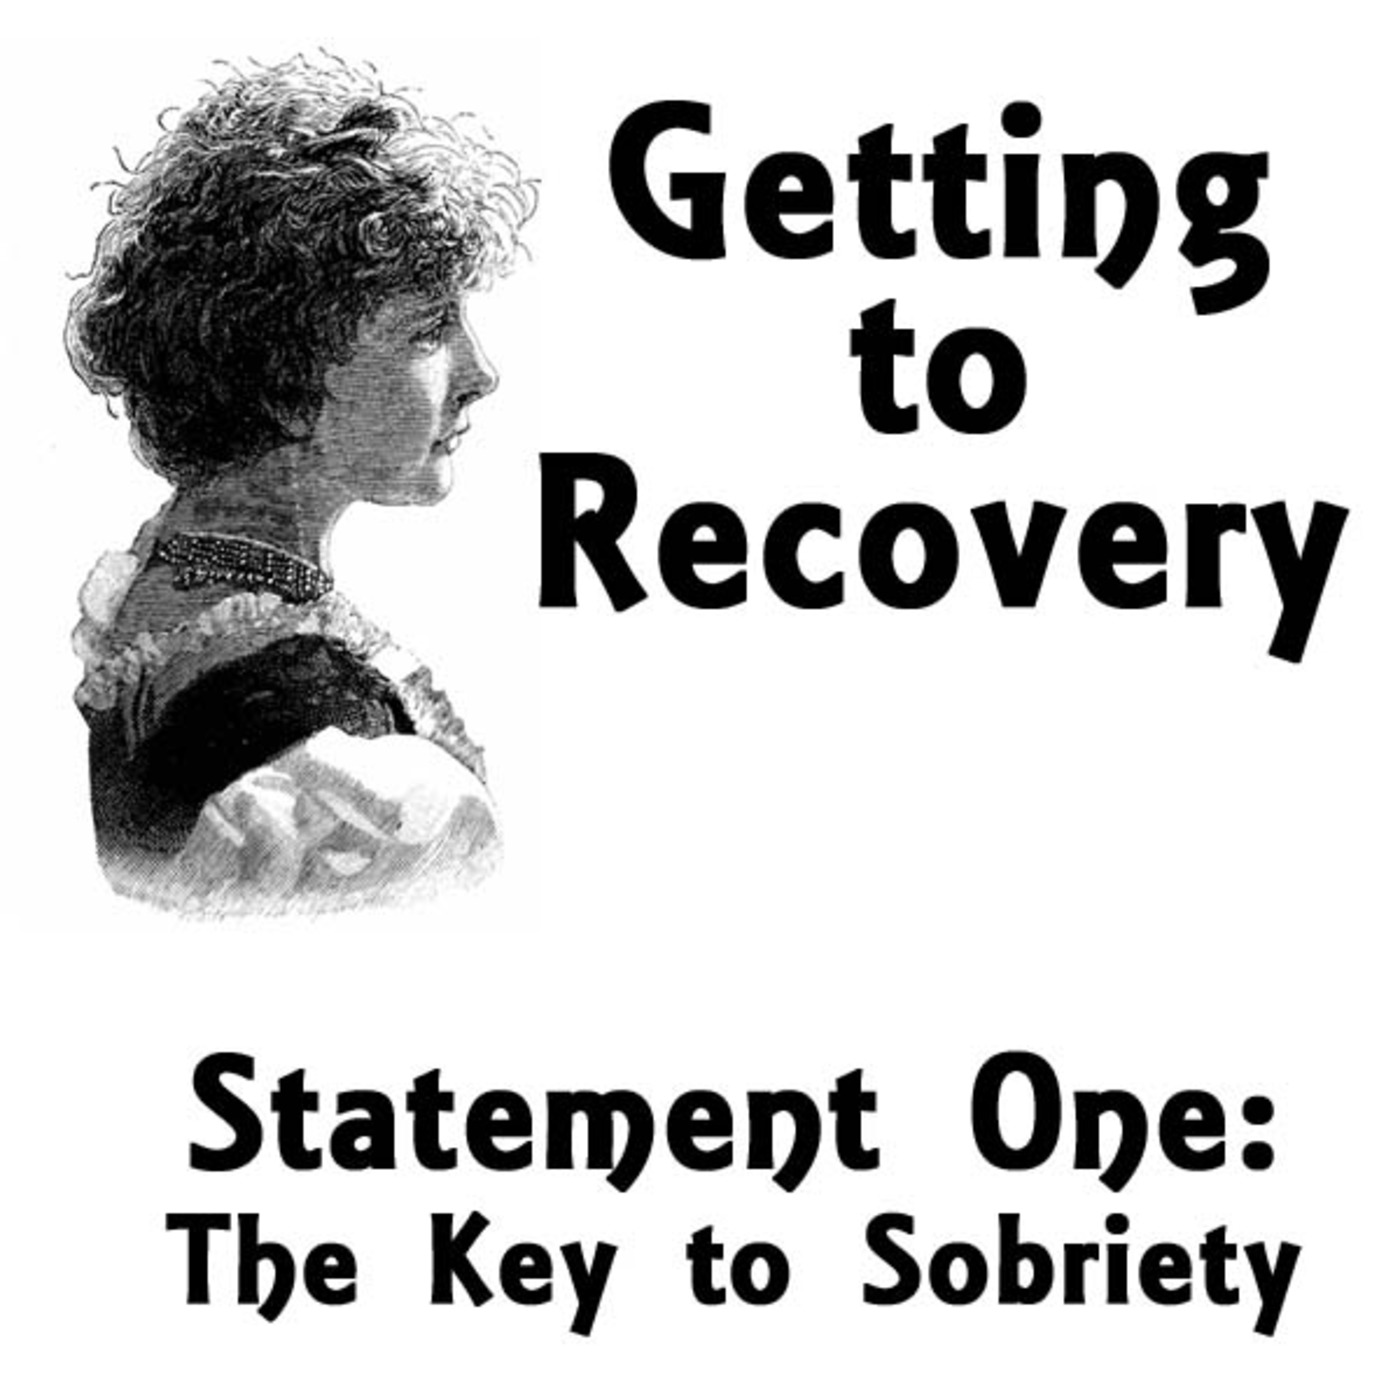 Statement One: The Key to Sobriety